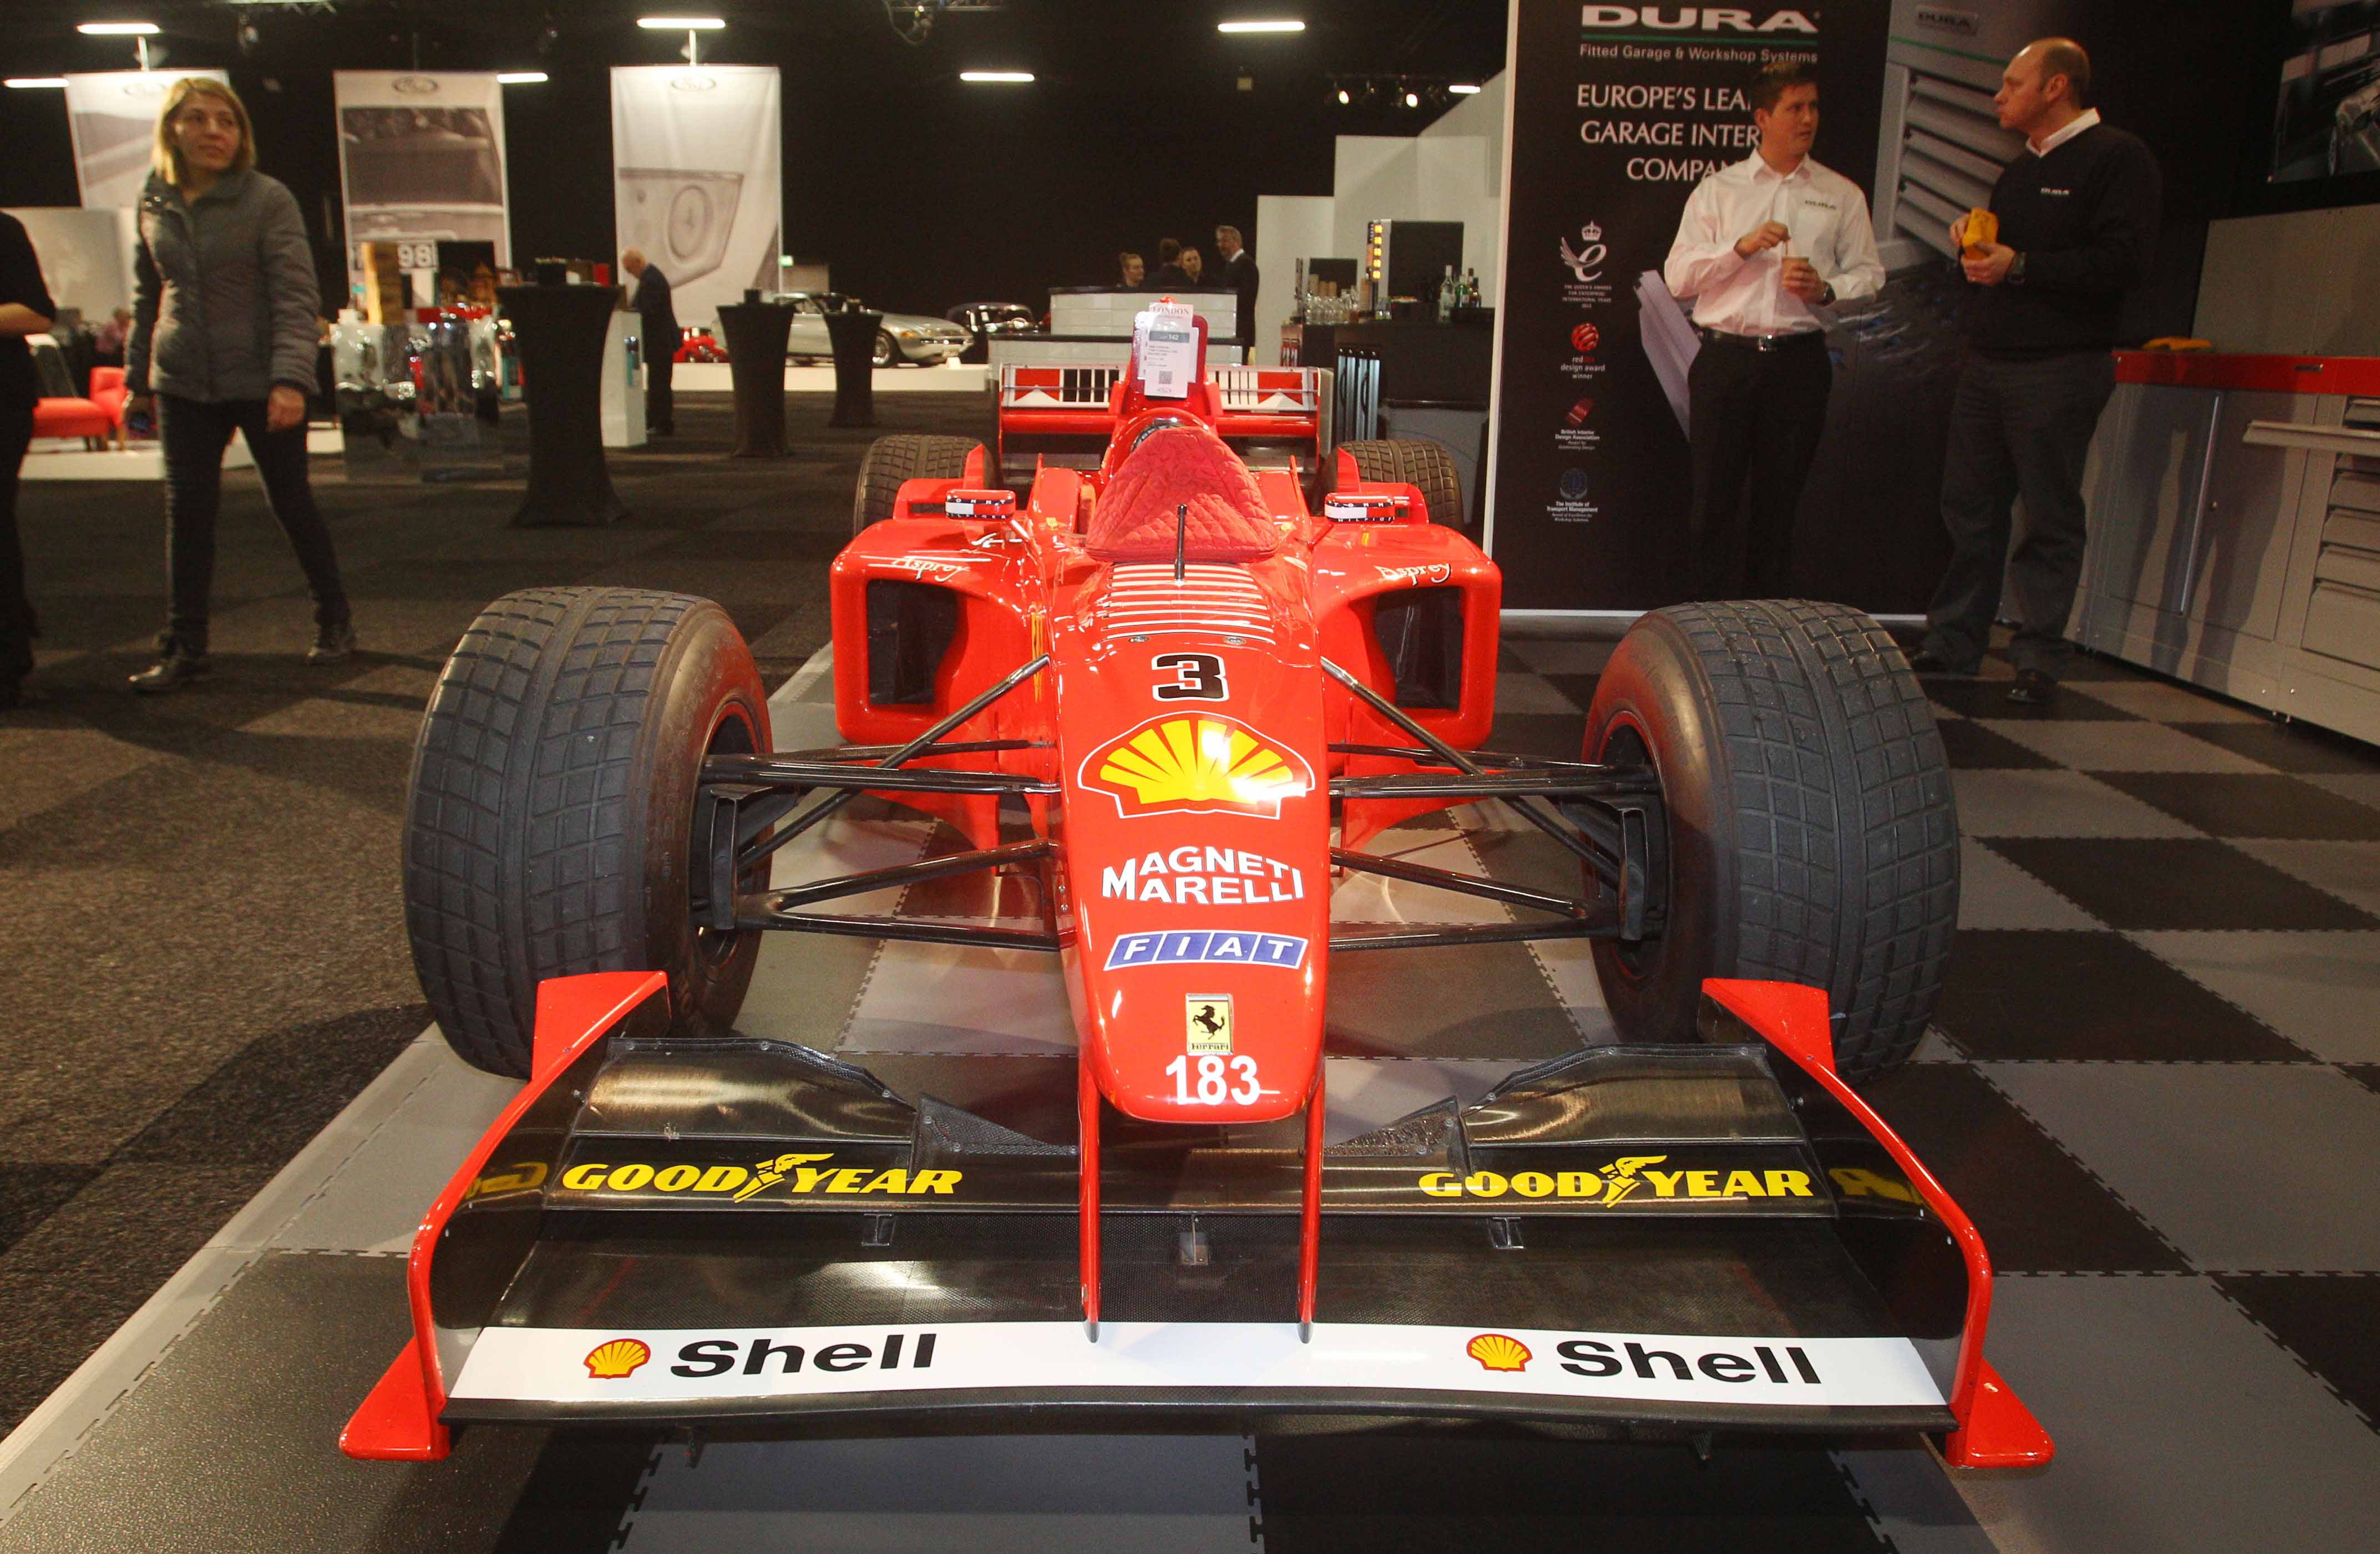 Michael Schumacher 1998 Ferrari up for auction.